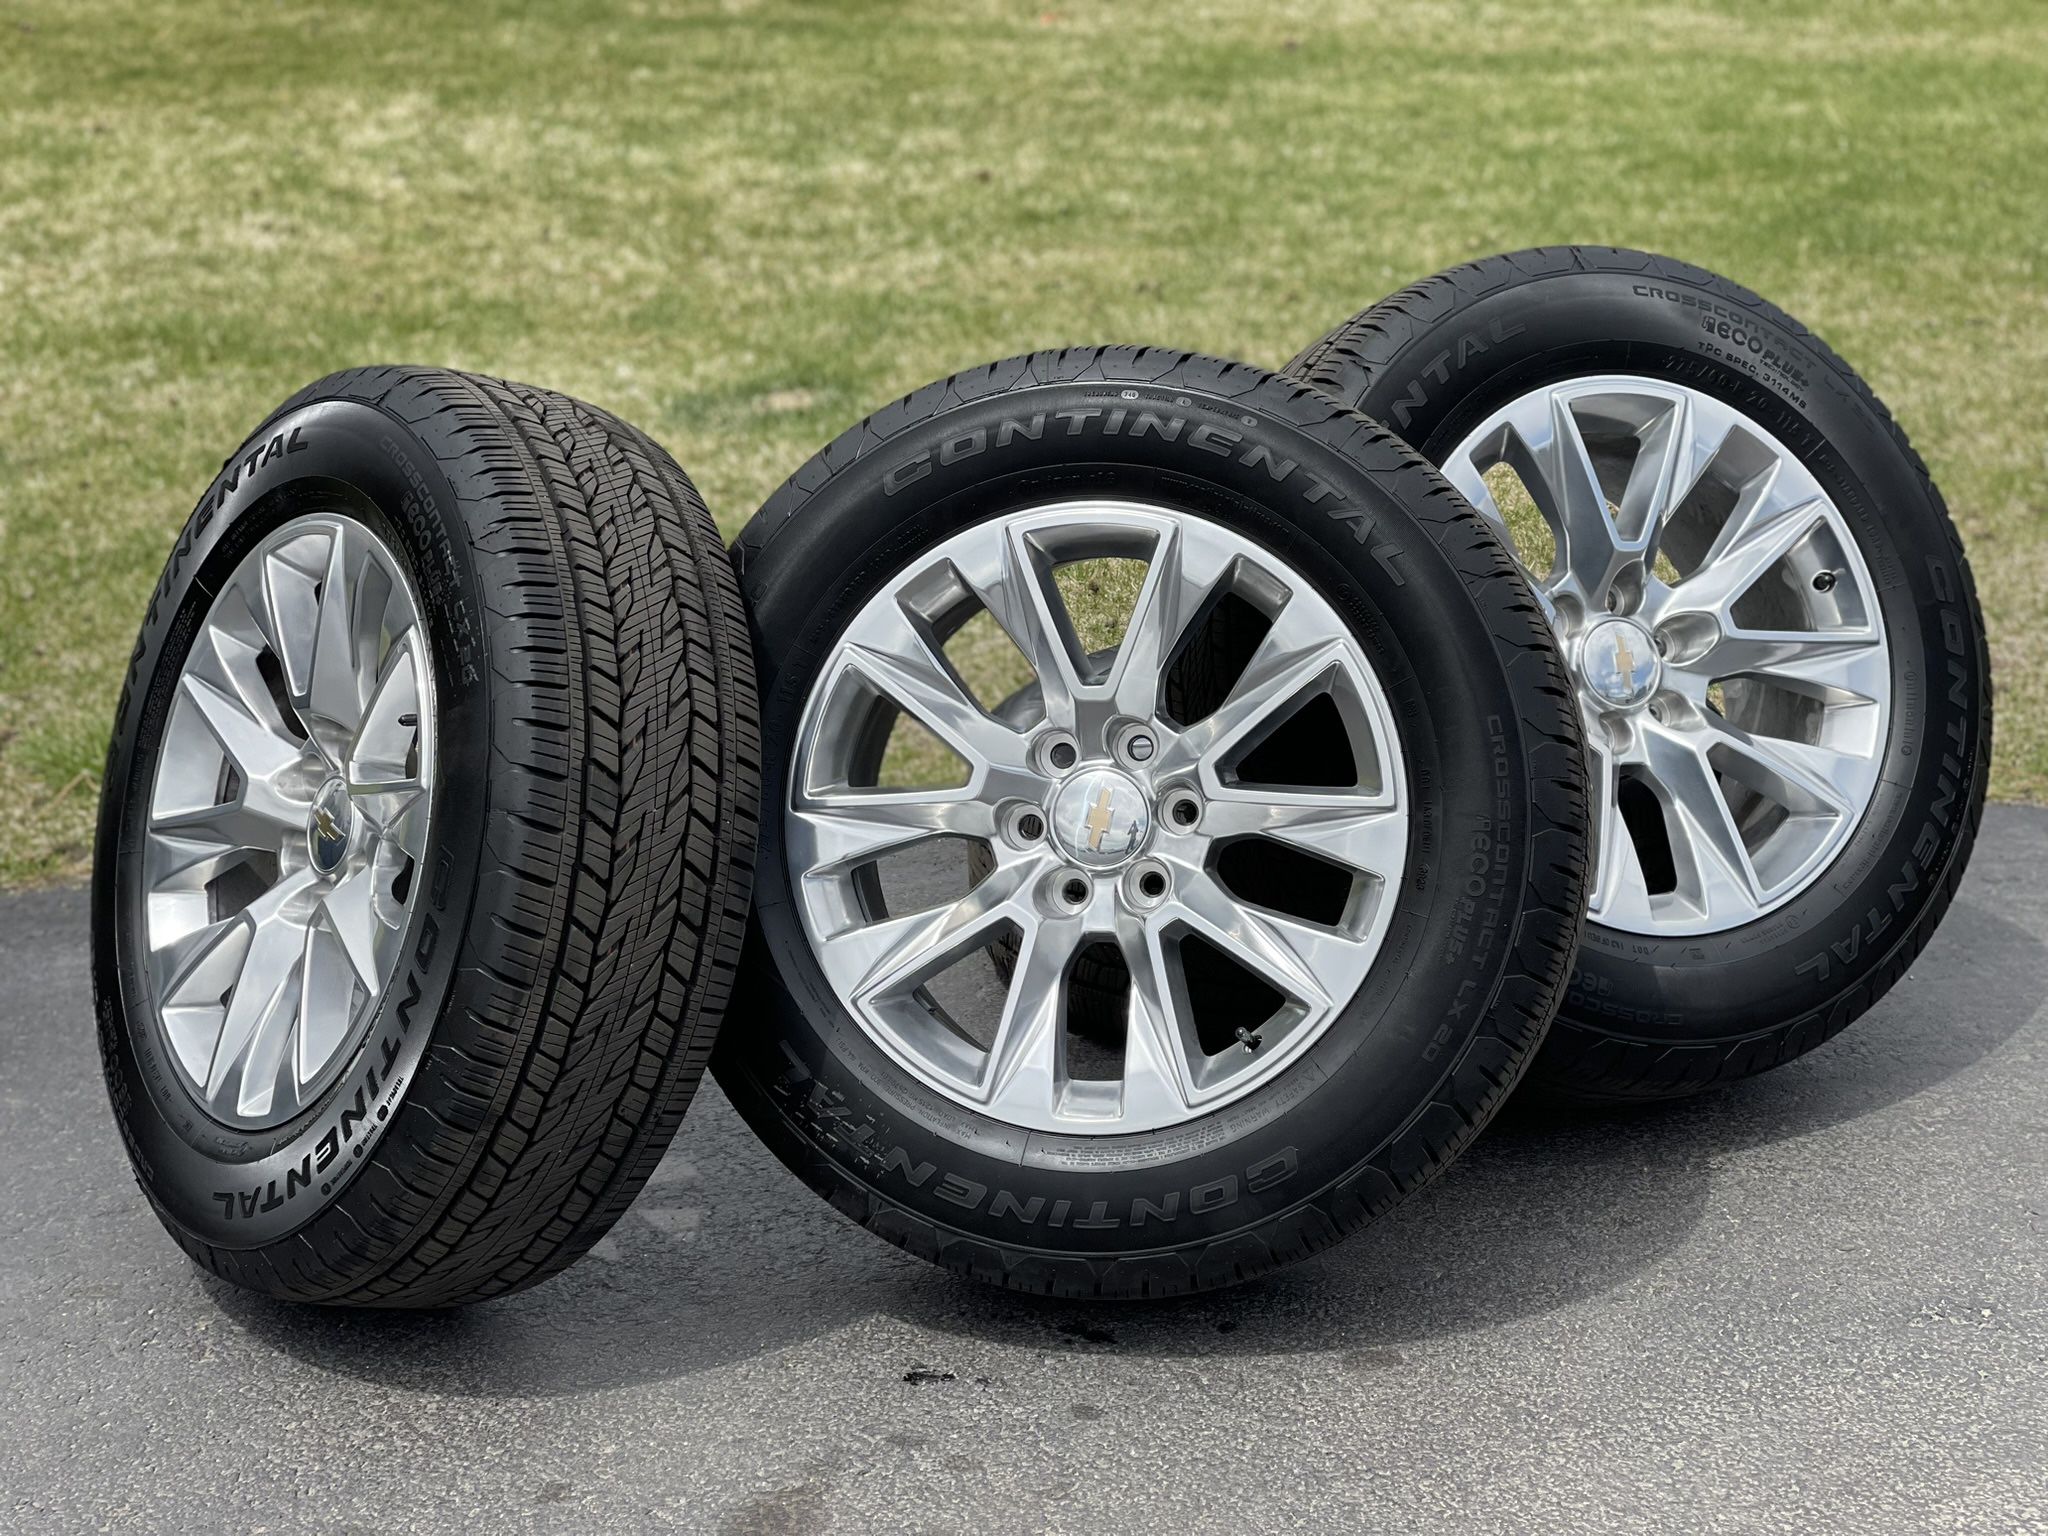 Polished 20” Chevy Silverado wheels 6x5.5 Tahoe LTZ rims GMC Sierra Tires Suburban Avalanche Yukon